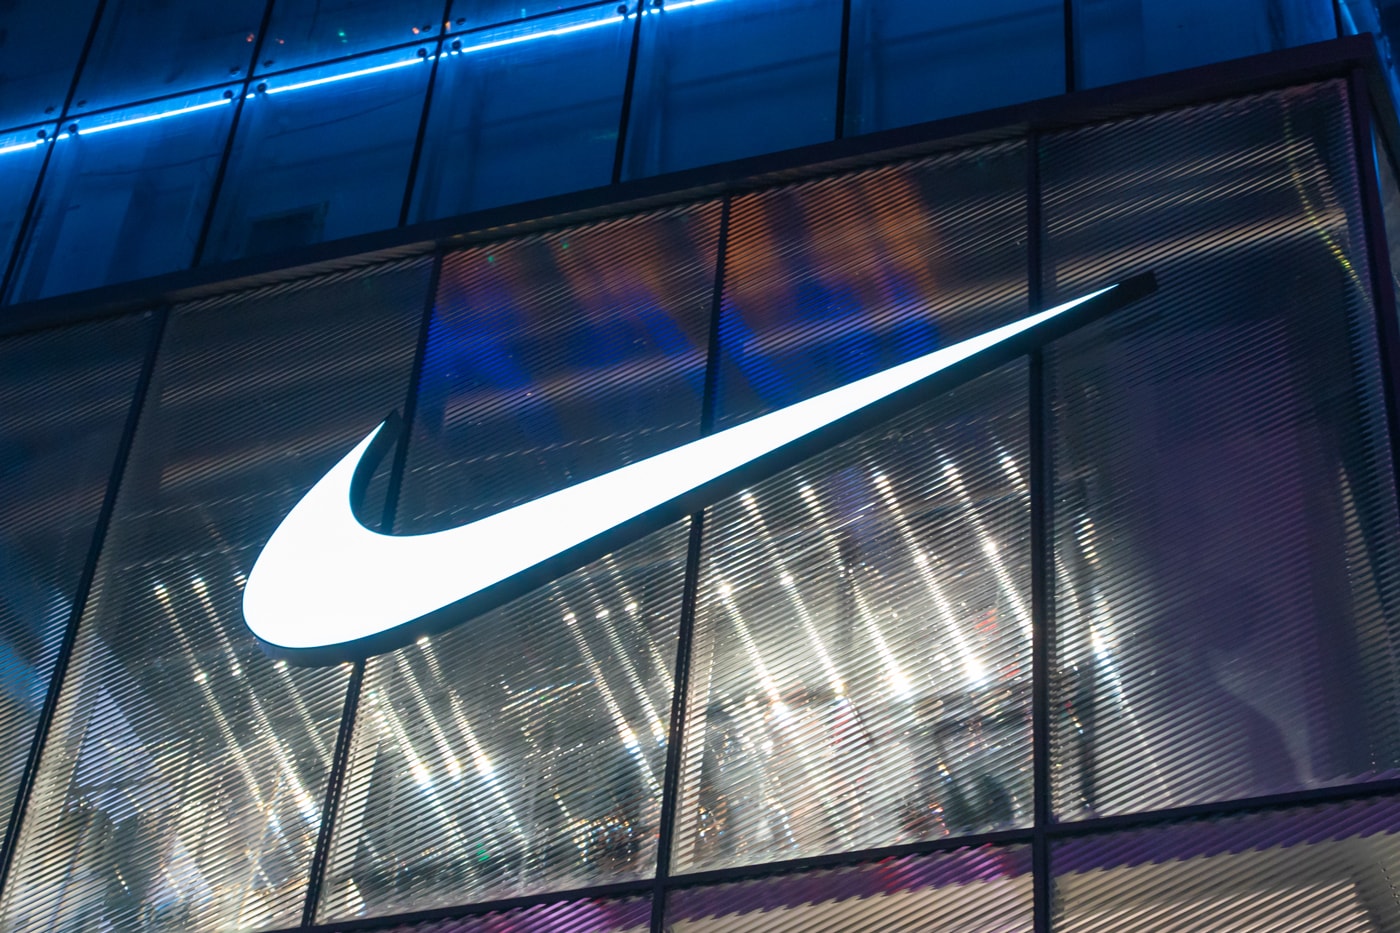 Industry Report Indicates That Nike Is the World's Most Popular Sneaker Brand statista industry report jordan brand sketchers adidas vans moonstar converse new balance